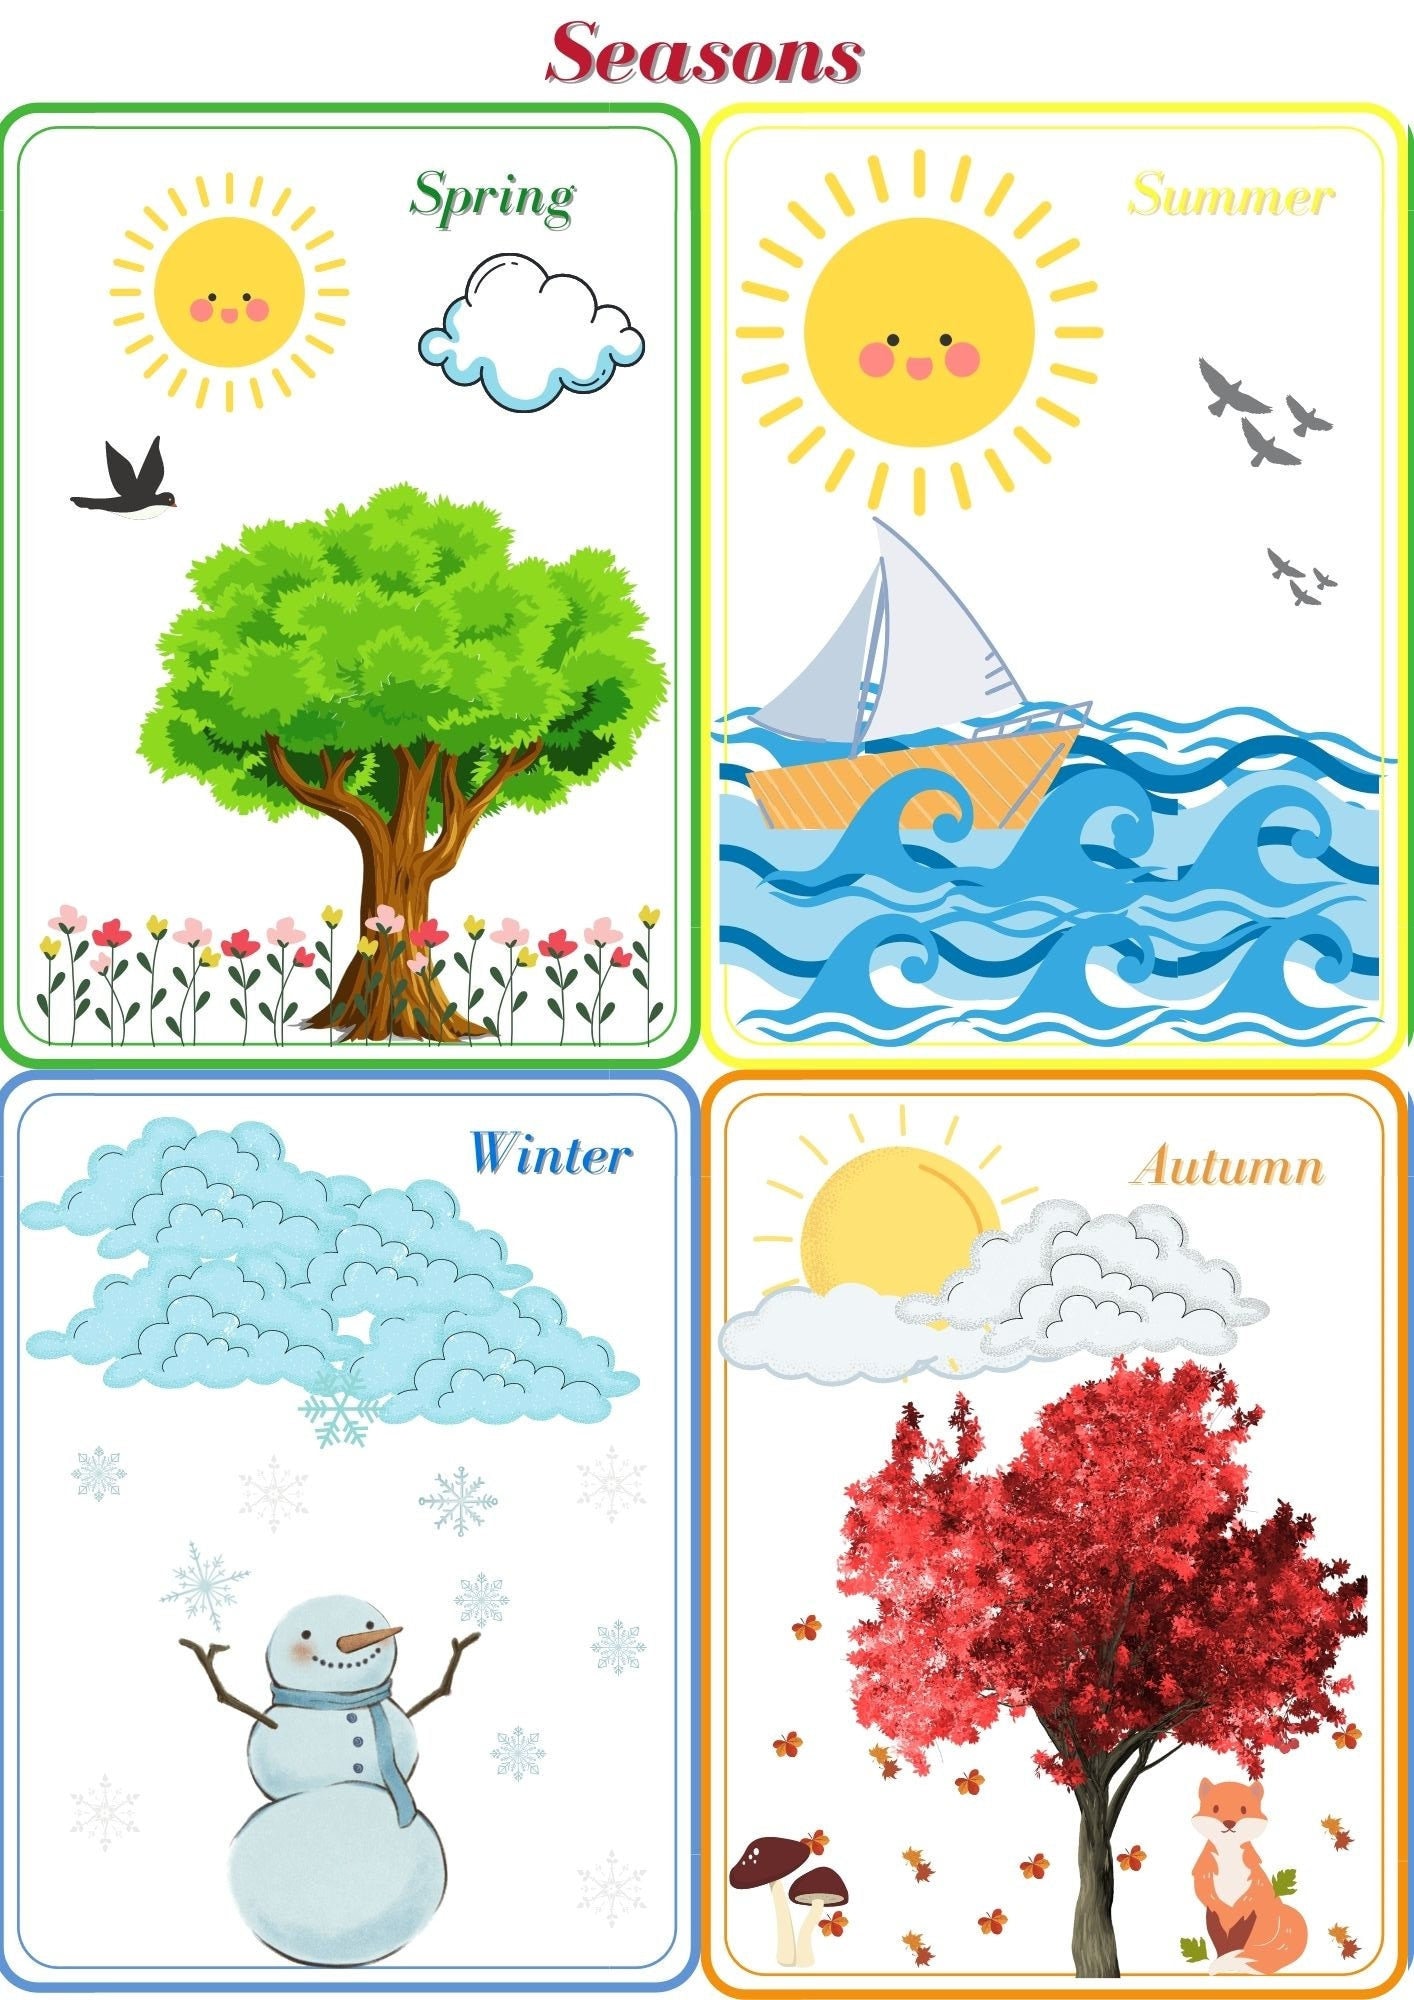 Seasons Flashcards for Kids. Seasons activities